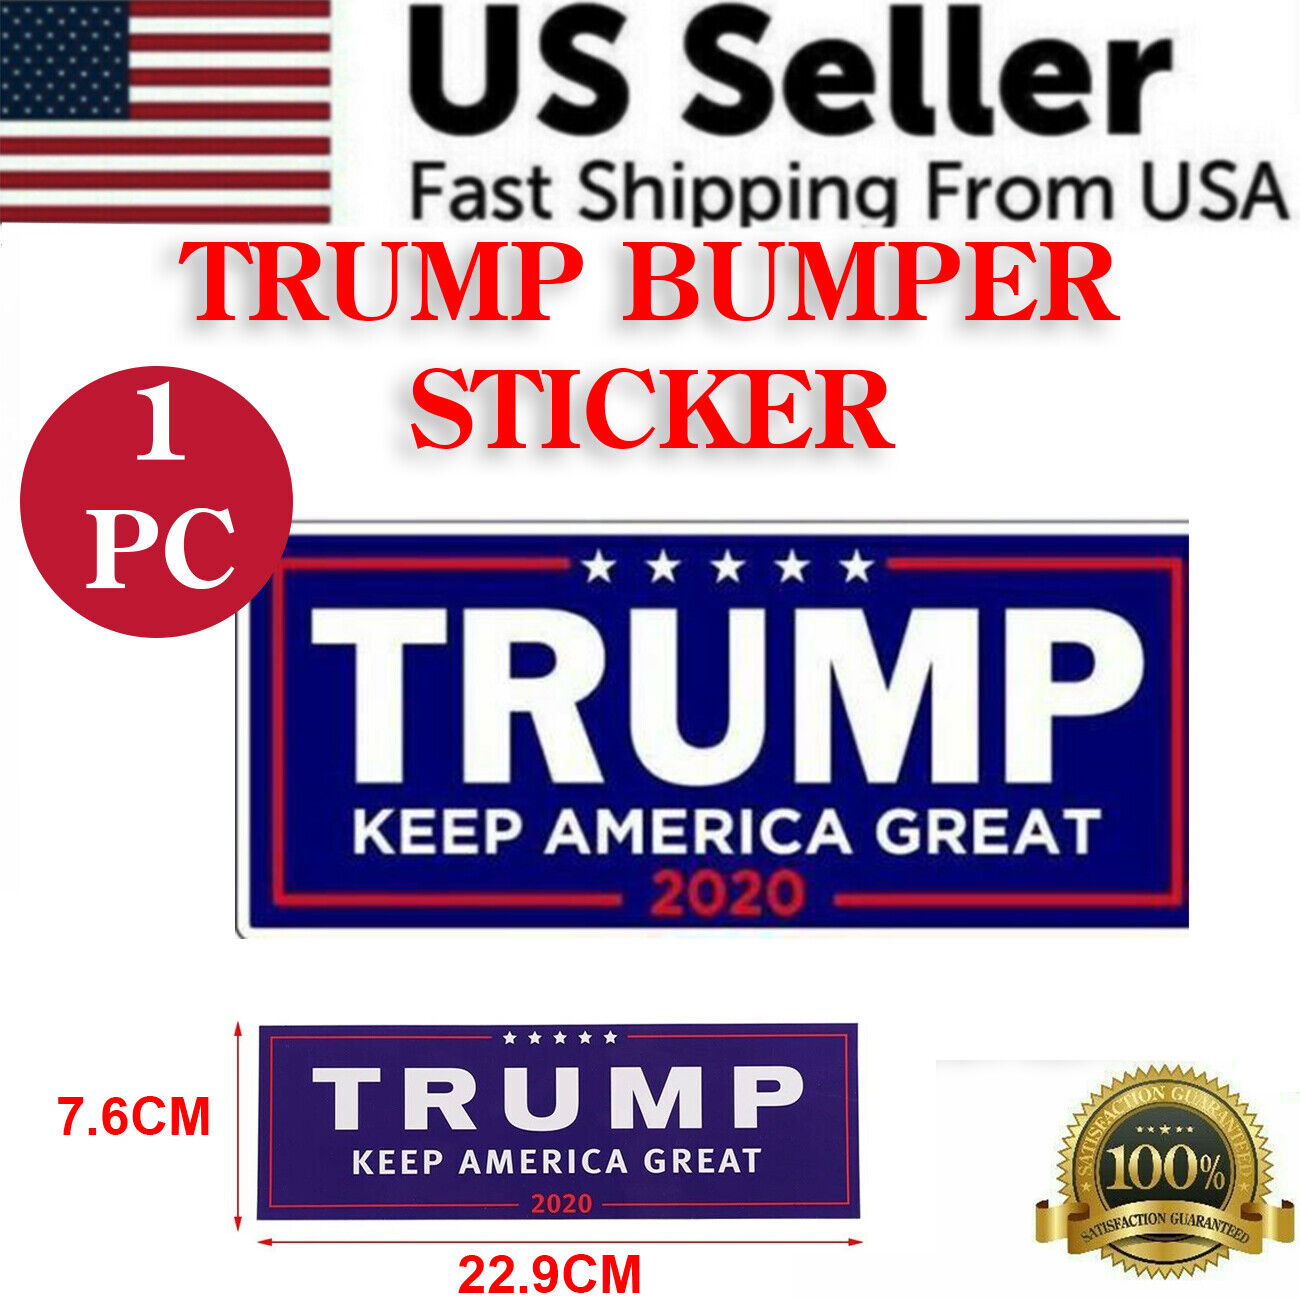 1 PC Trump Bumper Sticker 2020 President Campaign Keep America Great MAGA Decal